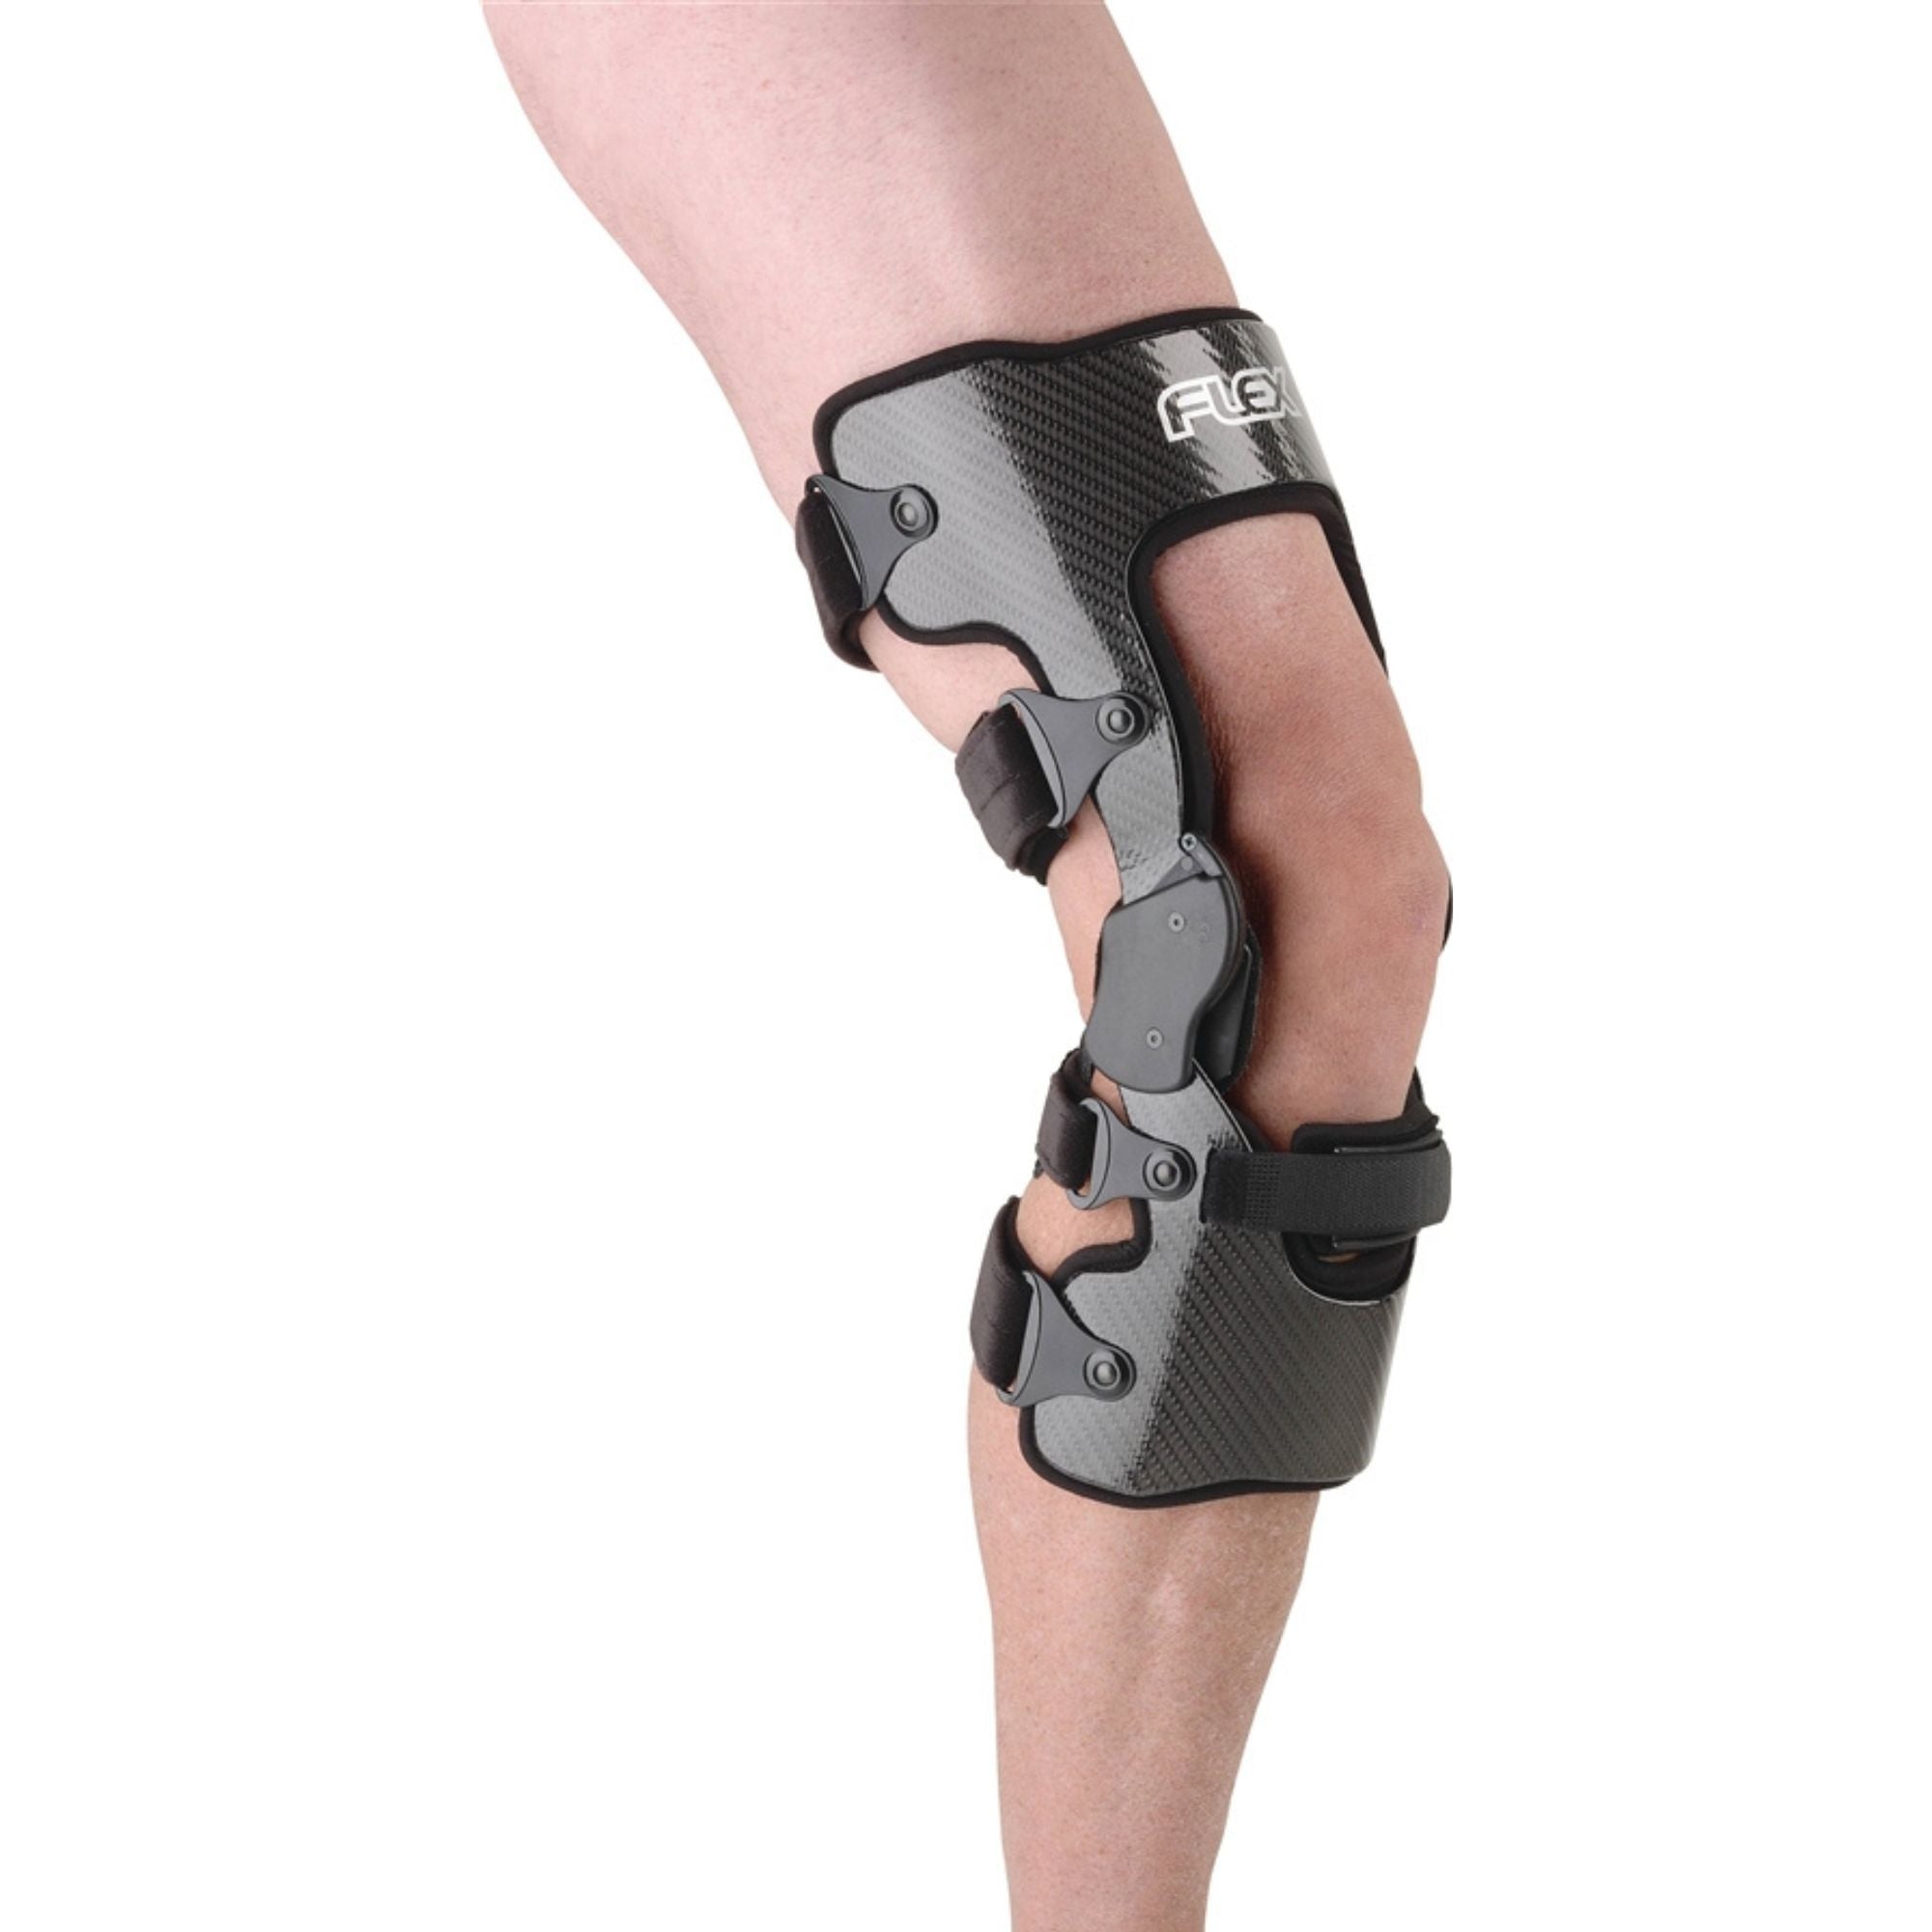 Ossur Flex Ligament Knee Brace